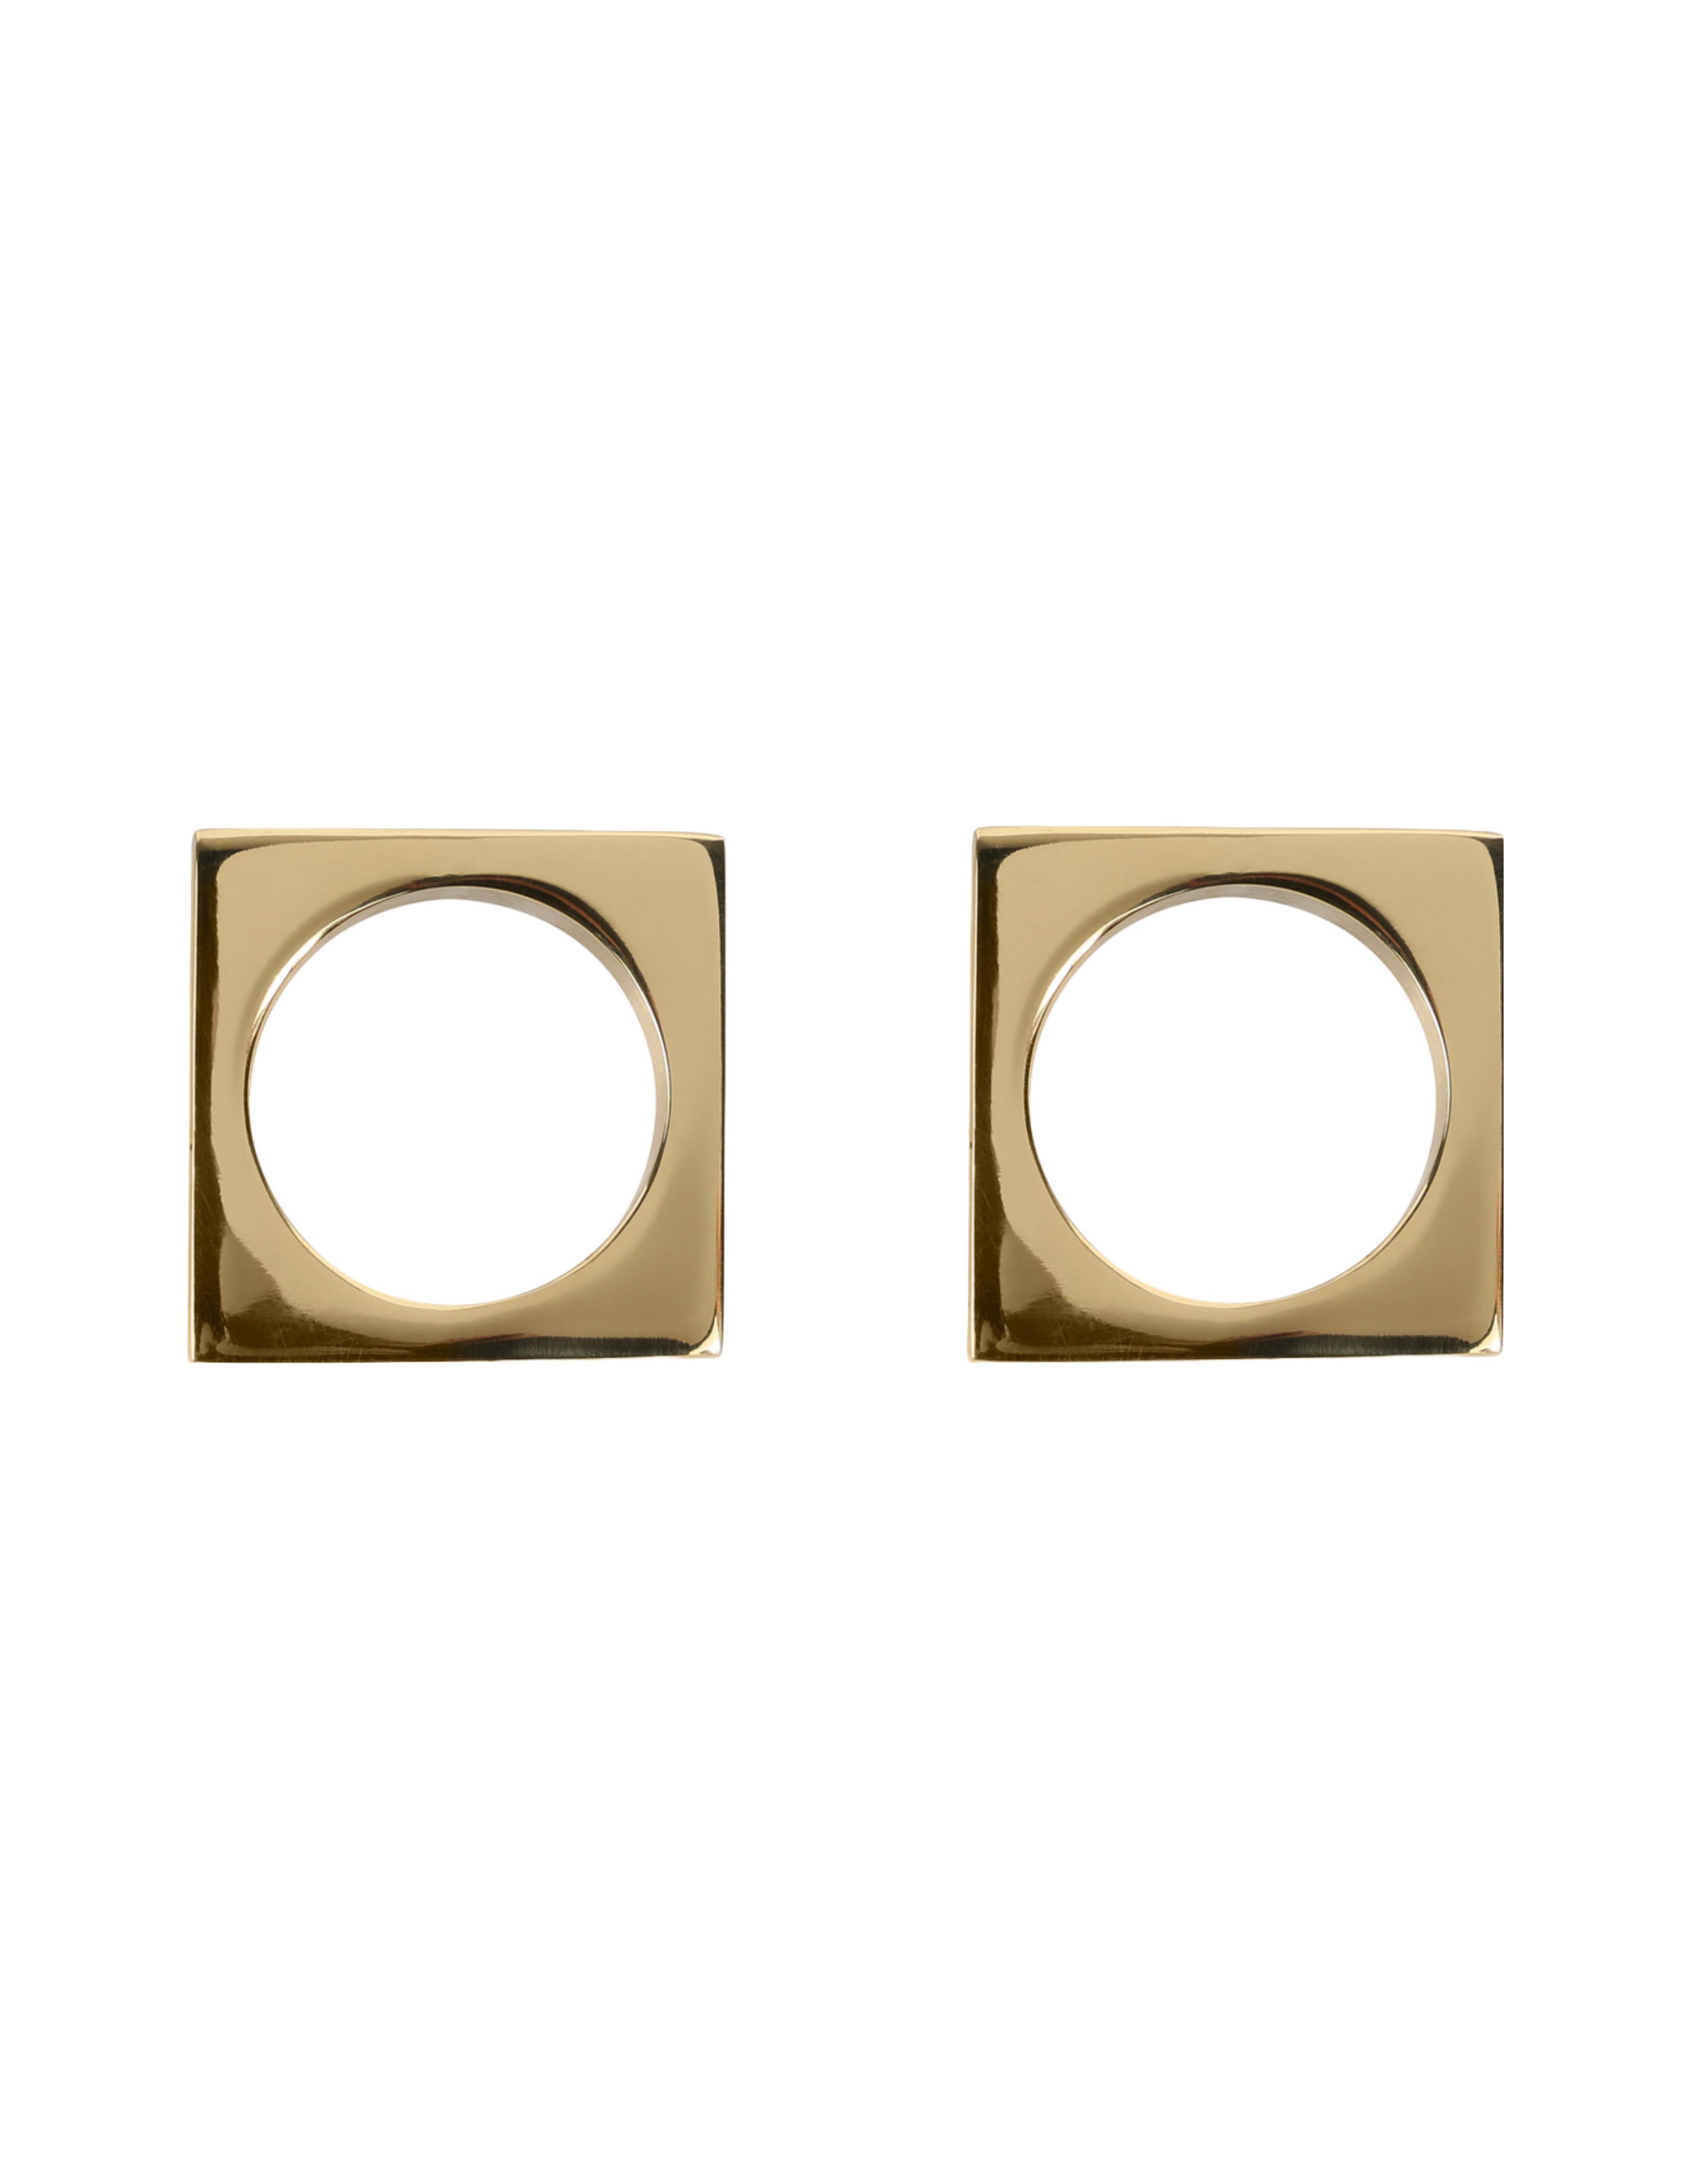 Modernist Napkin Ring Set of 2 - Brass